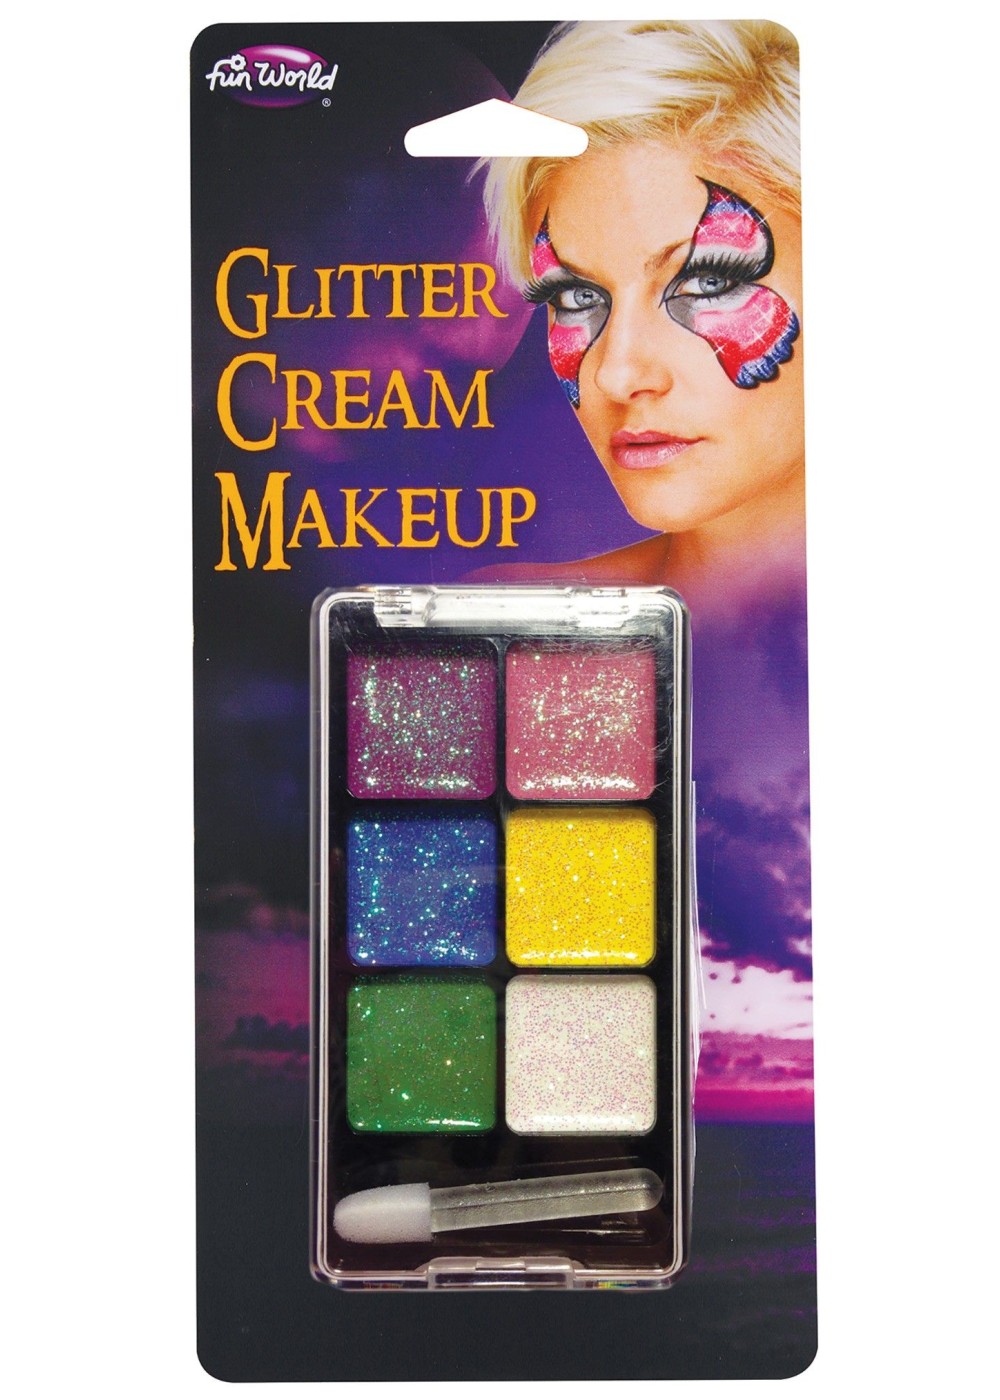 Glitter Creme Makeup Palette